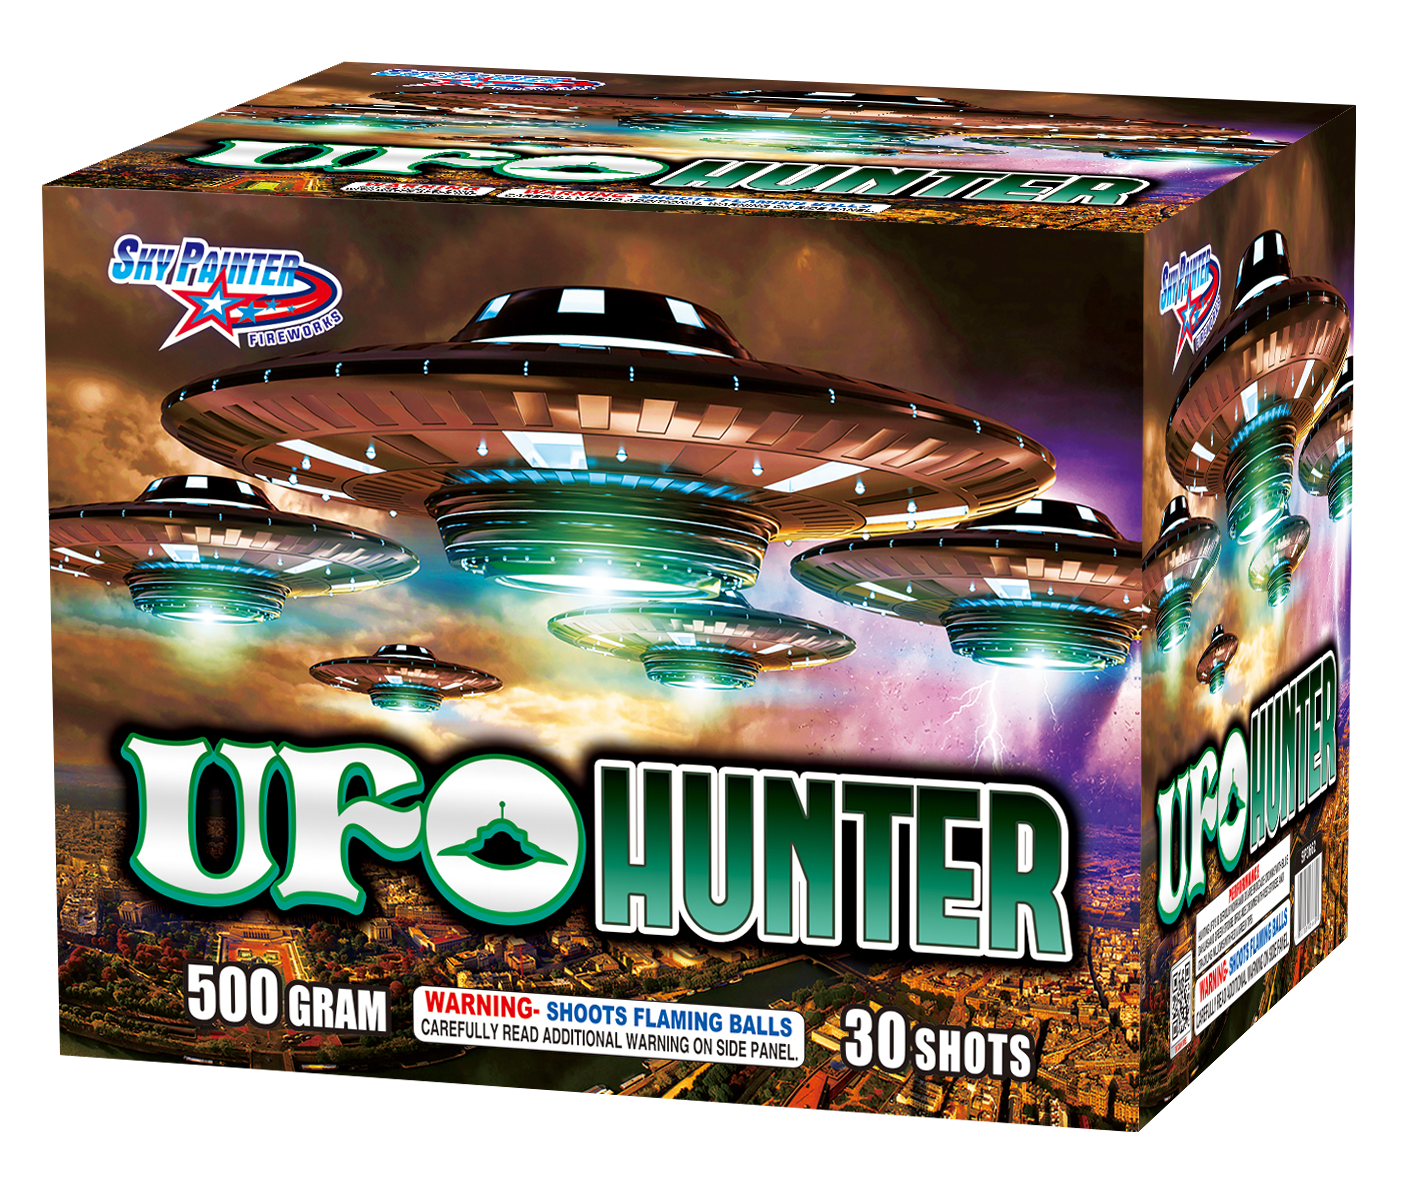 UFO HUNTER BY SP(3/1)